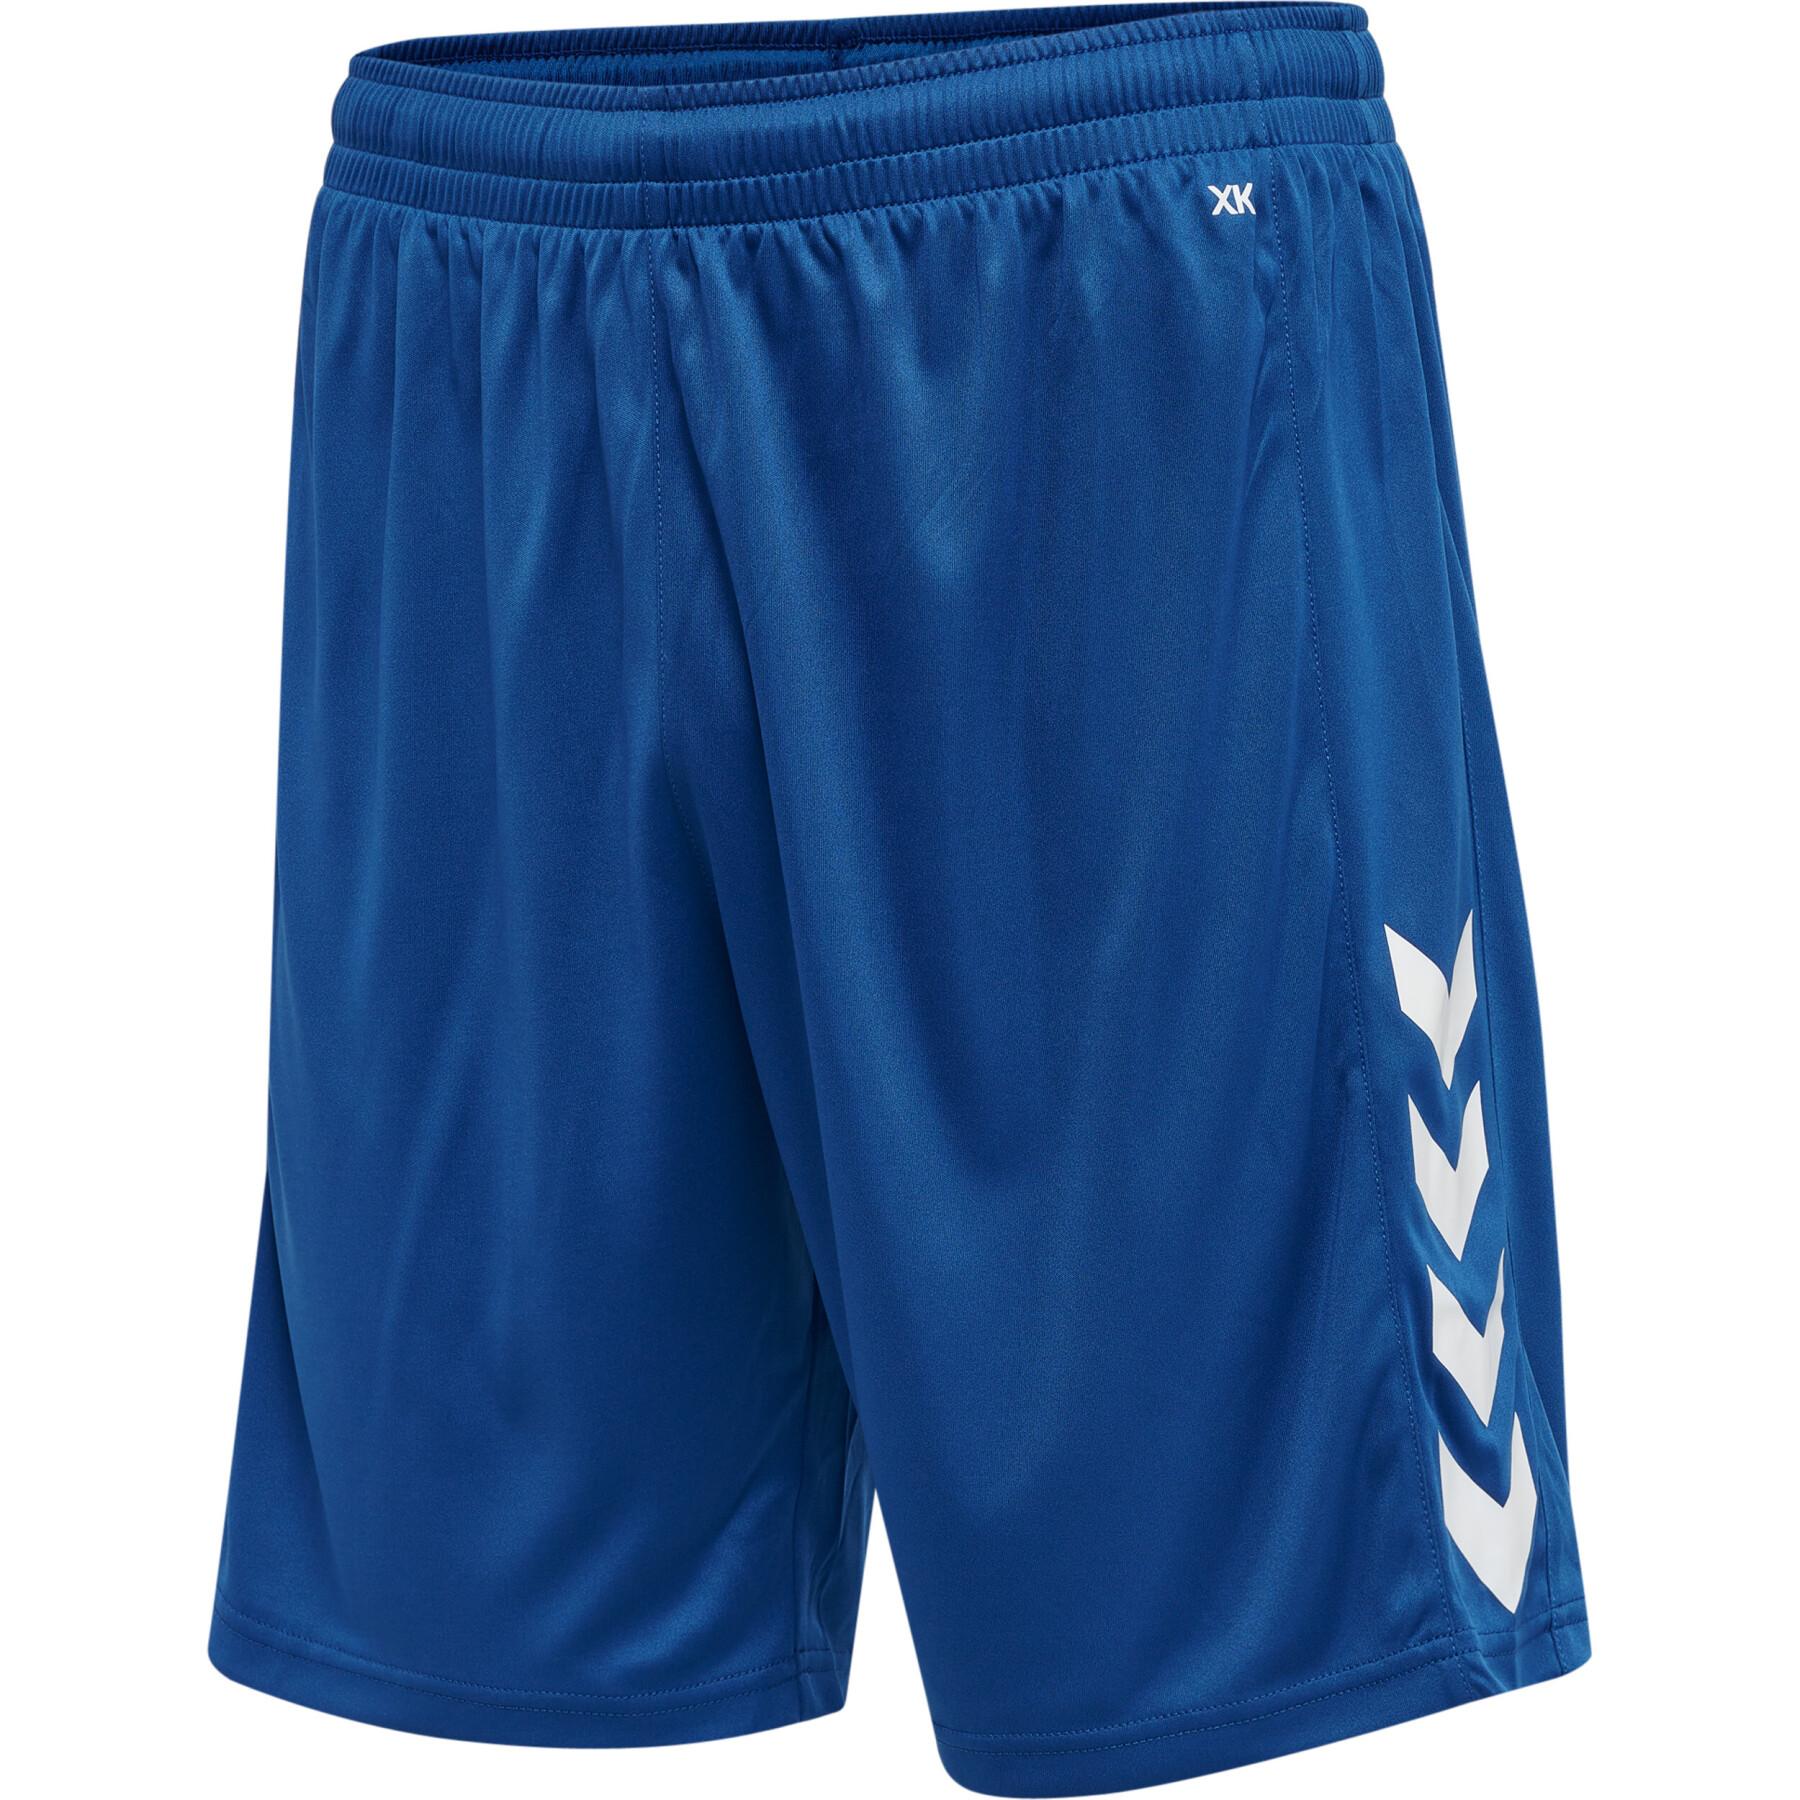 shorts Hummel Core XK - Shorts - volleyball wear - Volleyball wear